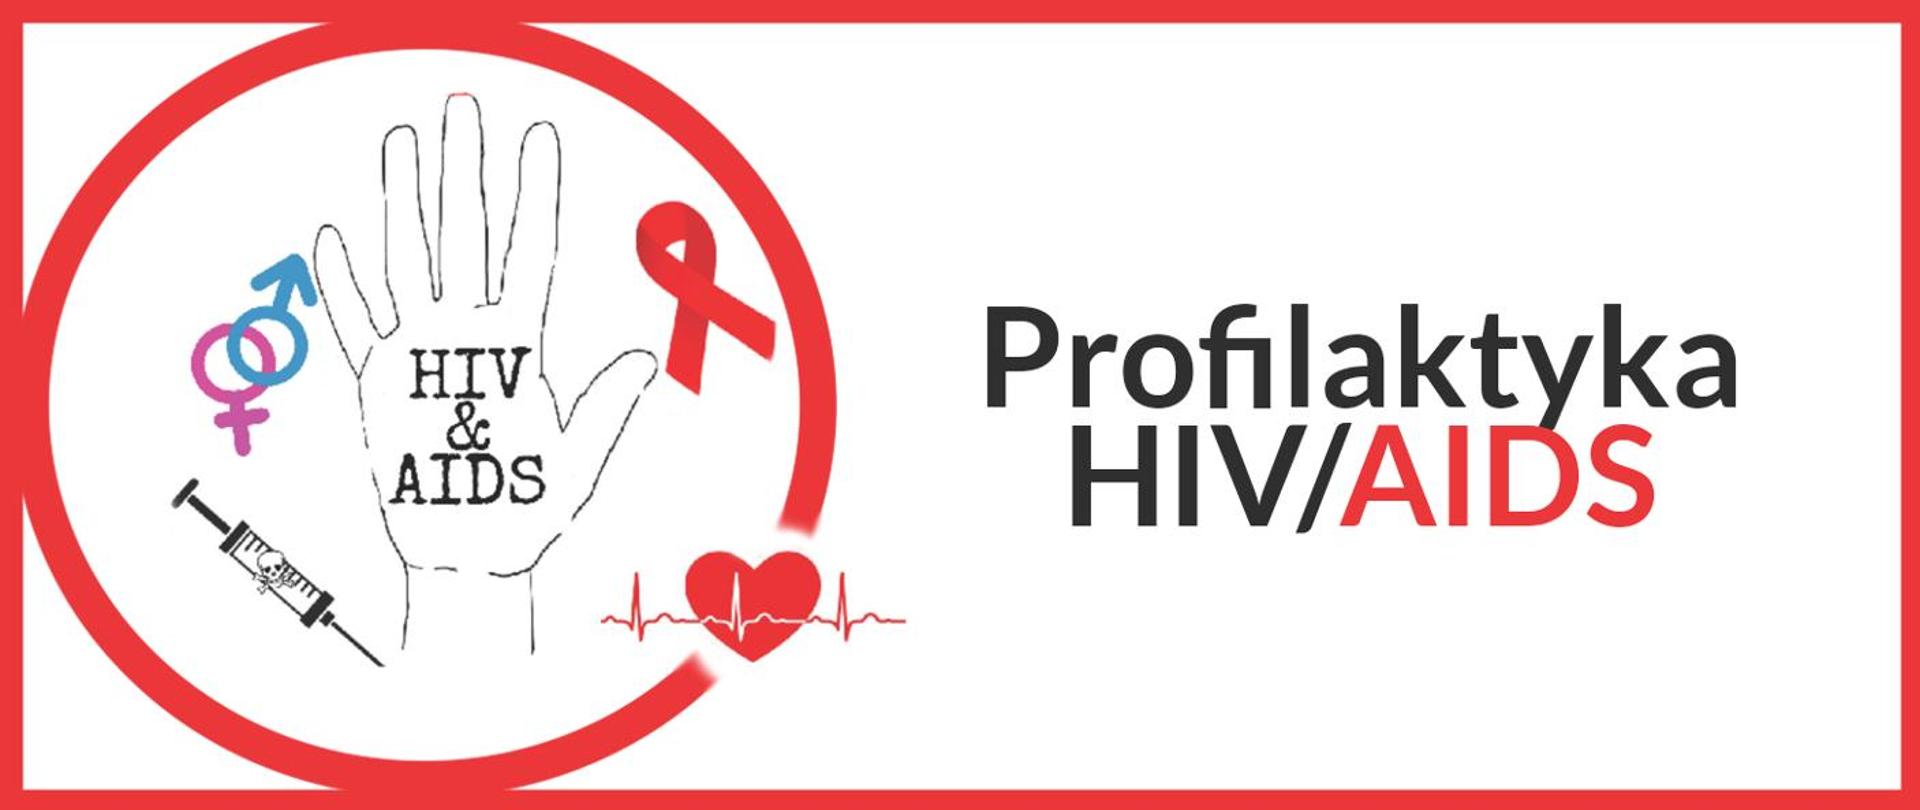 baner Profilaktyka HIV/AIDS rysunek dłoni z napisem hiv/aids